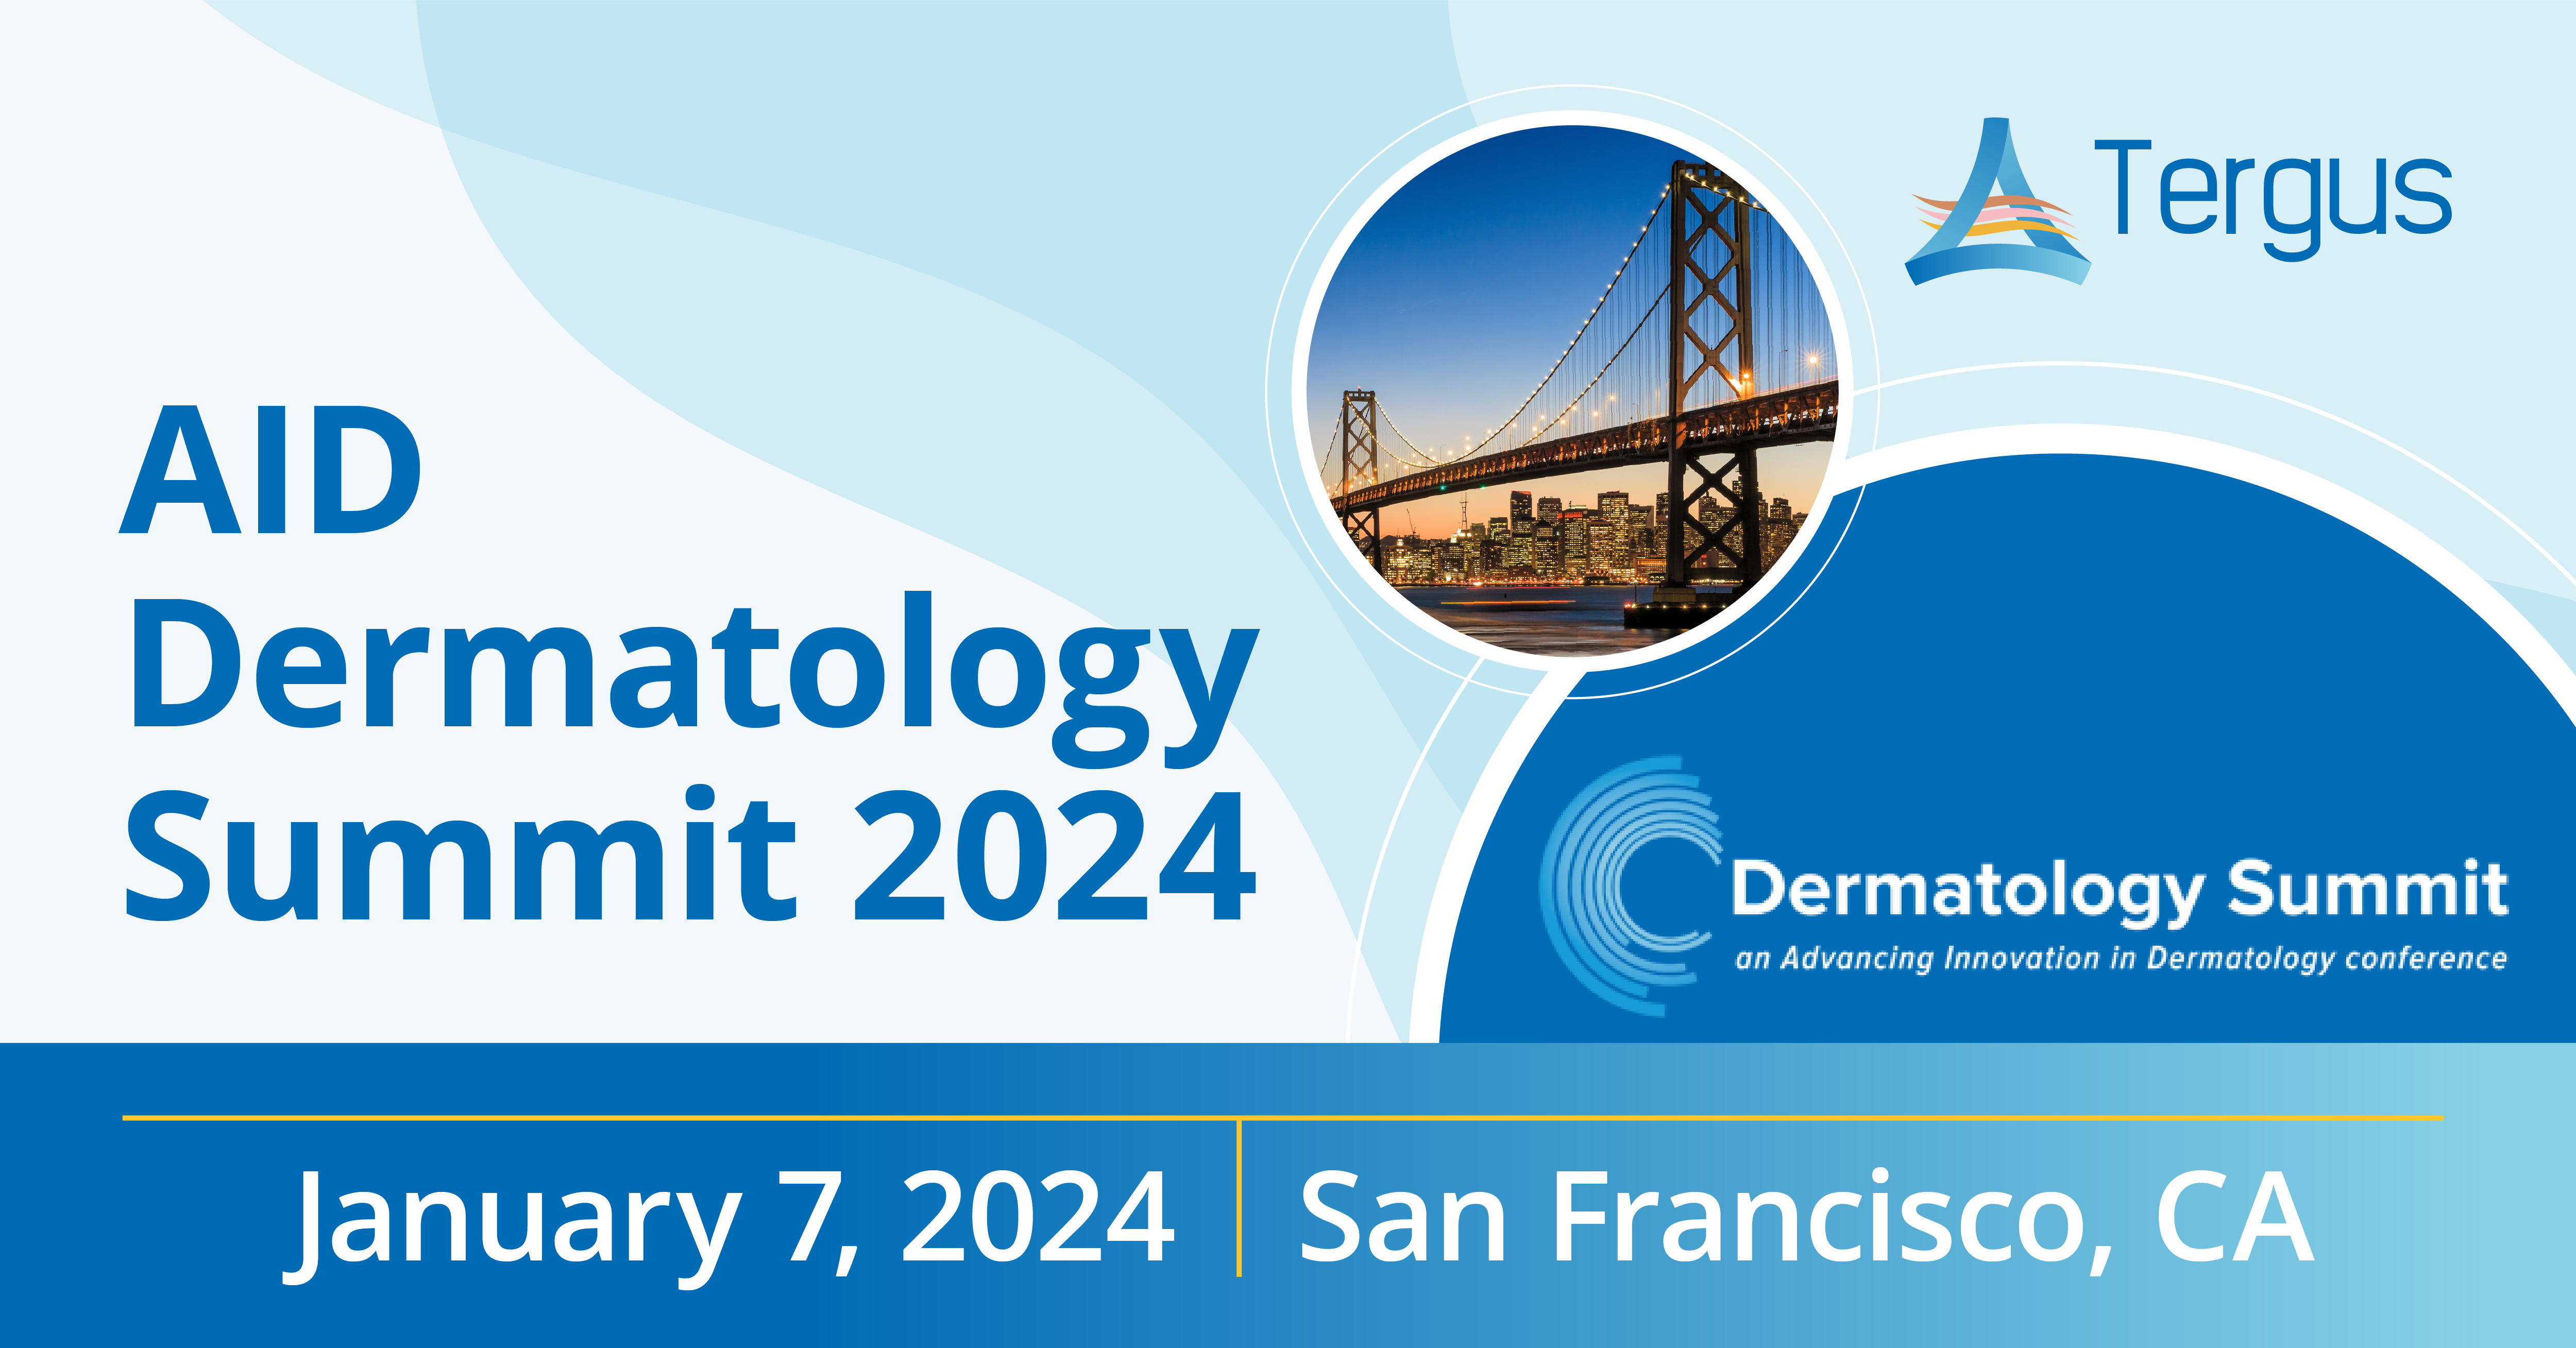 AID Dermatology Summit 2024